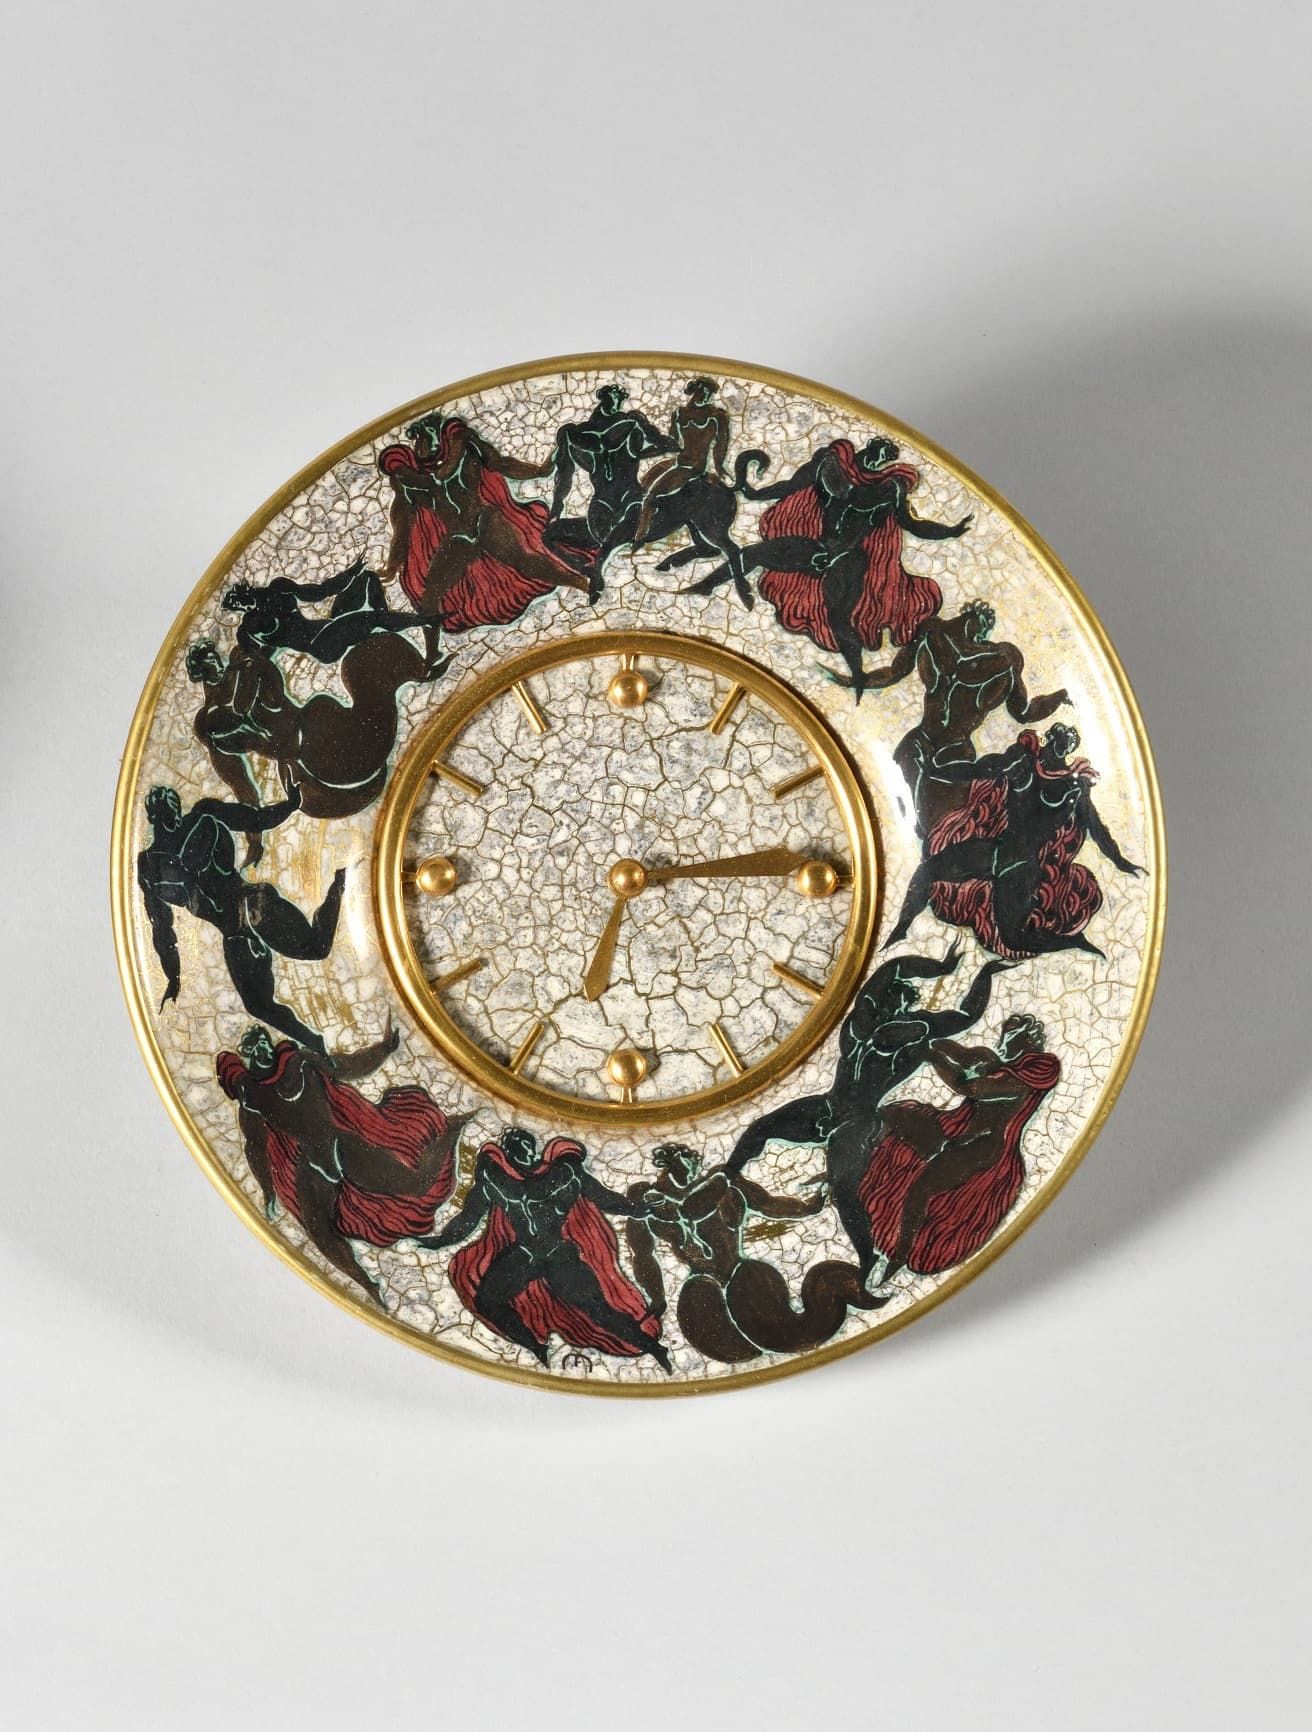 Null 让-马约东(1893-1967)
圆形盘子，宽的边缘，装饰着黑色，红色和绿色的珐琅彩陶瓷，有金色的裂纹，作为挂钟安装，指针和表盘是镀金的黄铜。
背面有&hellip;